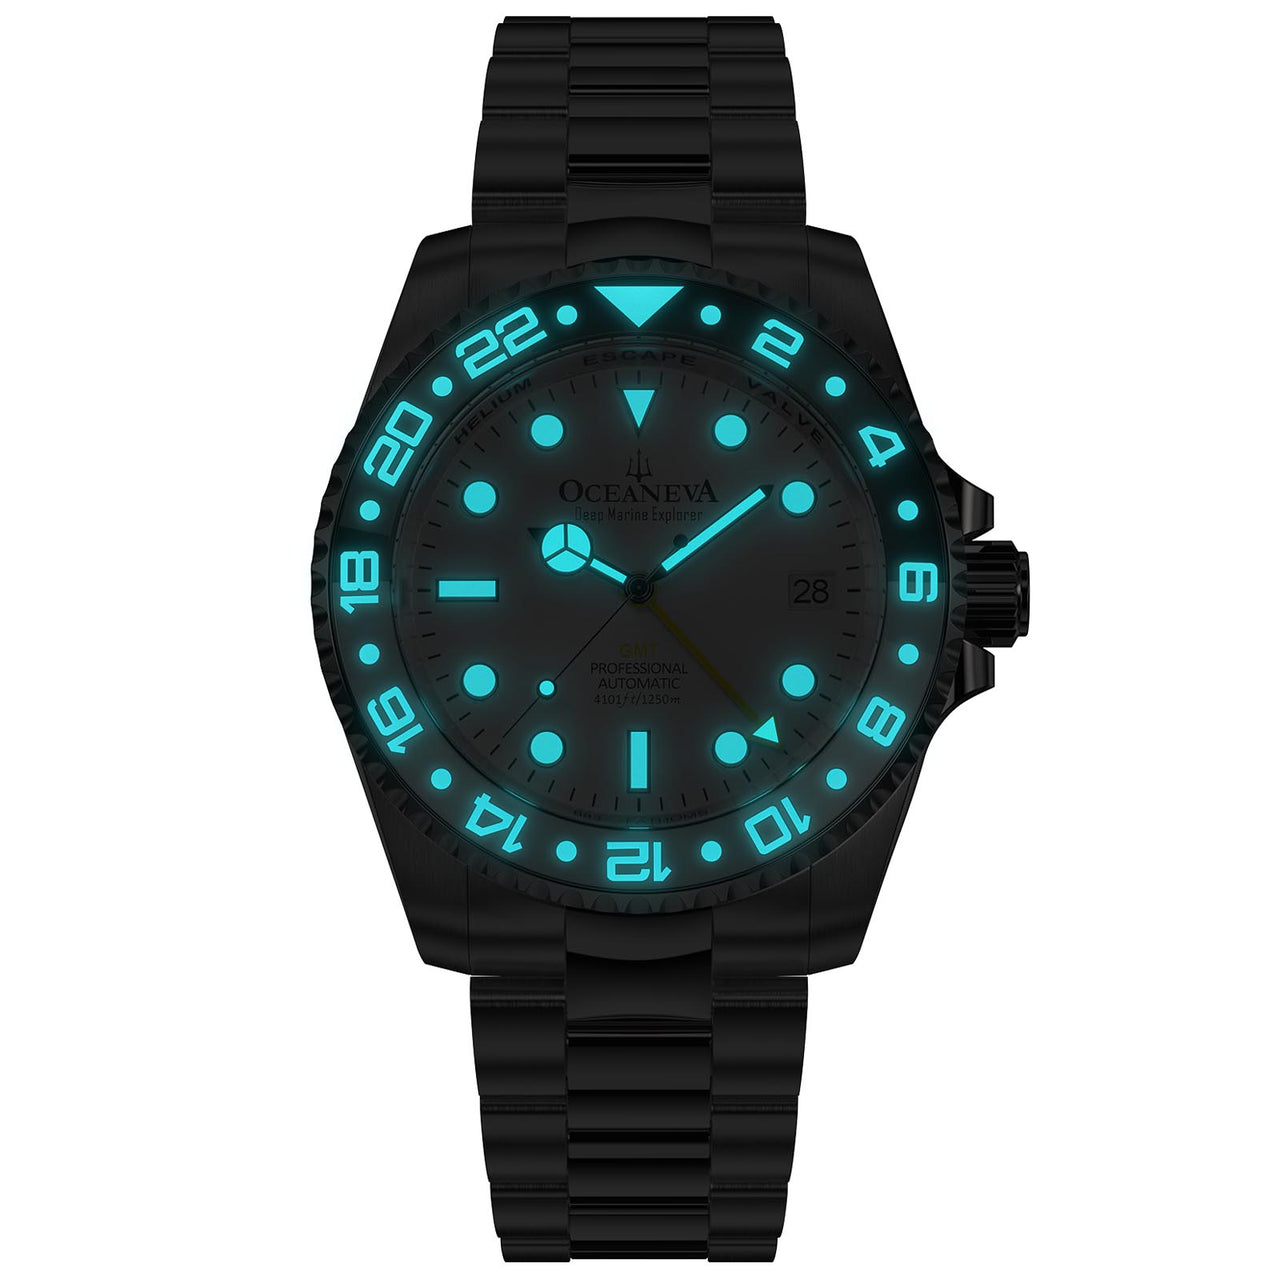 Oceaneva Titanium Automatic Watch with enhanced luminosity BGW9 Grade A upgrade